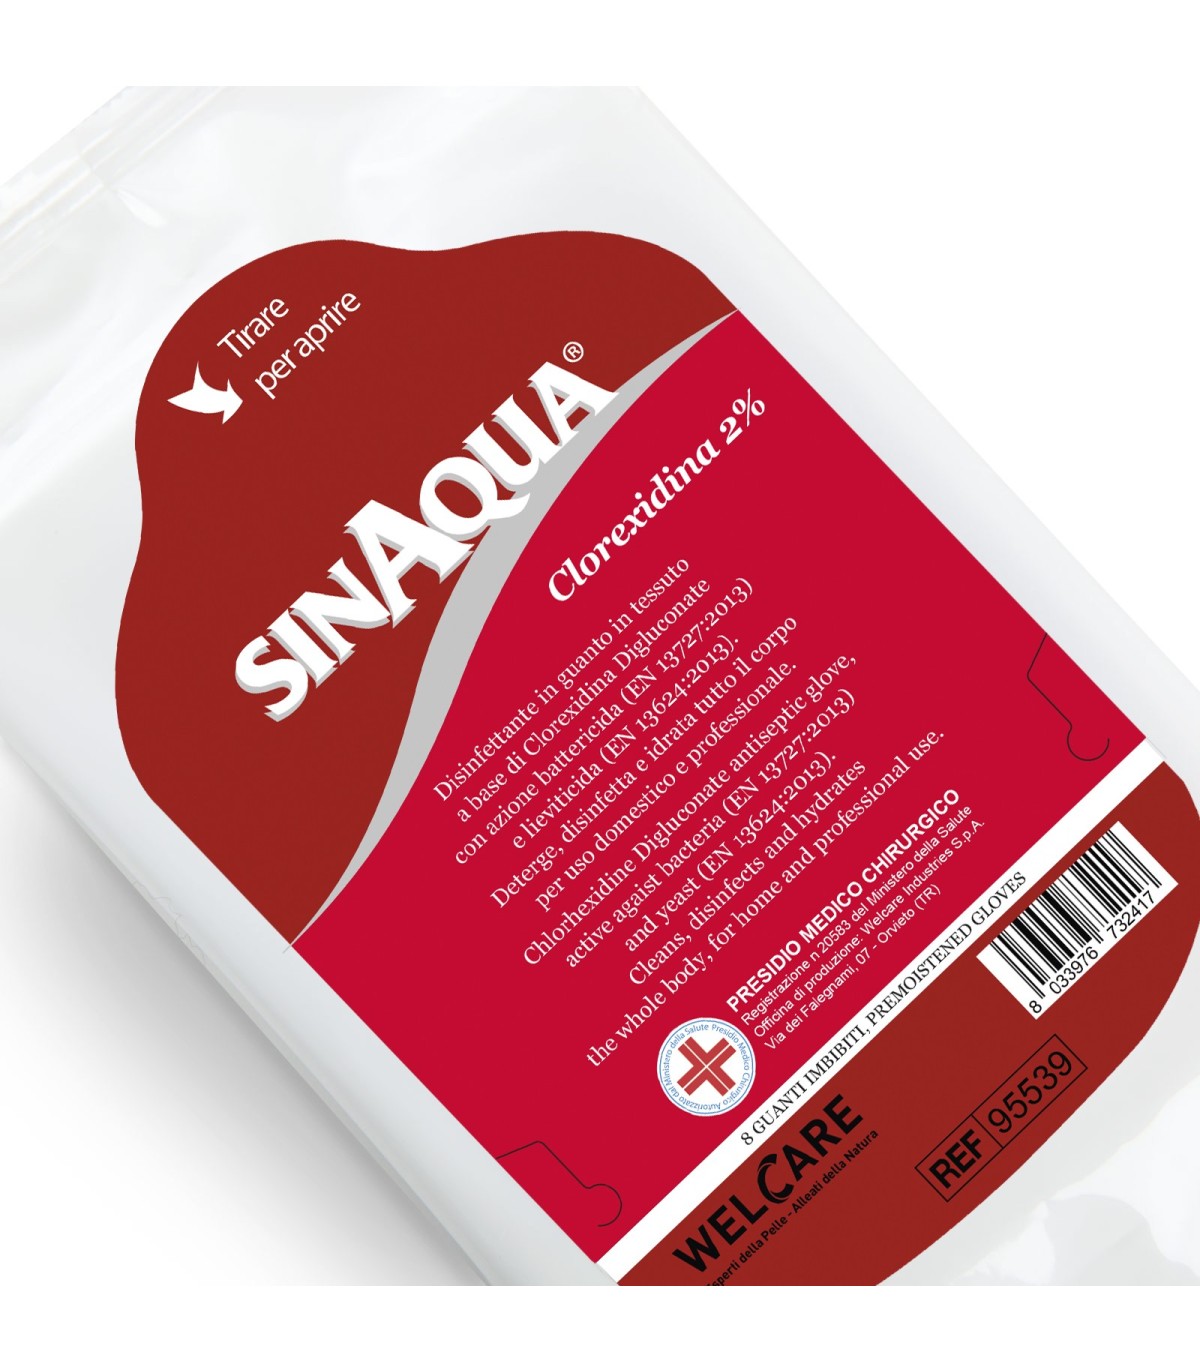 Sinaqua® Clorhexidina 2% Manopla